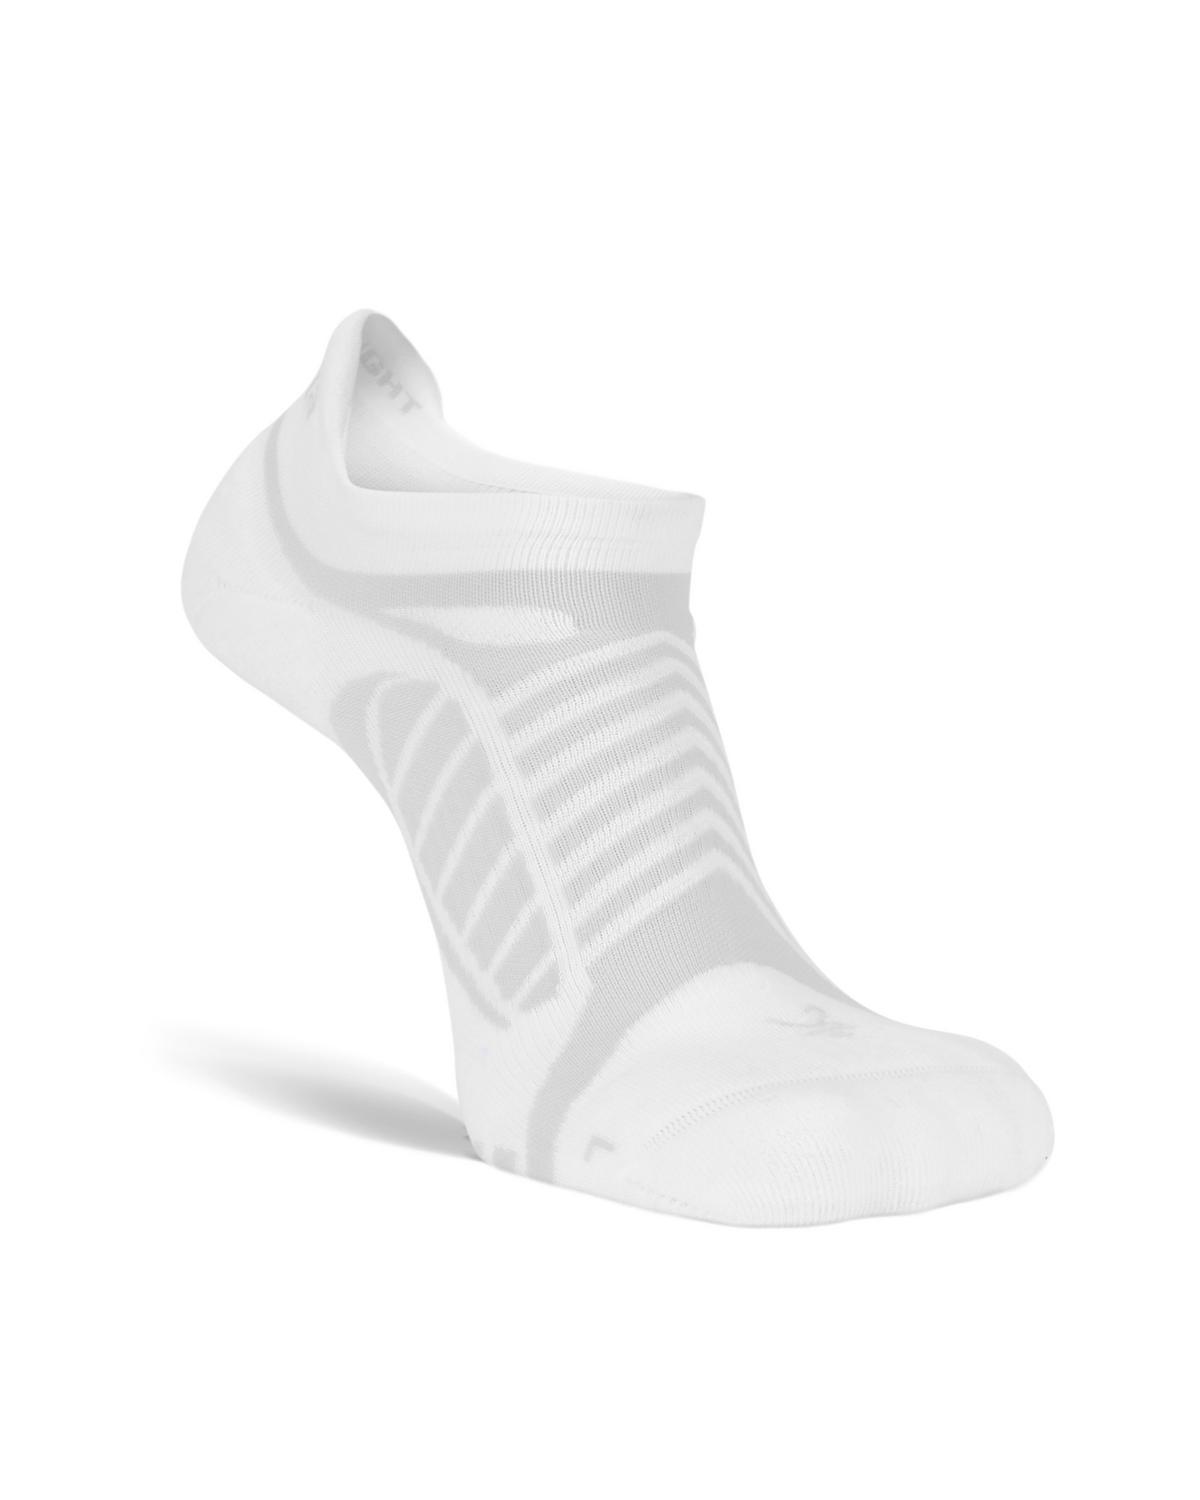 Balega Men's UltraLight No Show Socks -  White